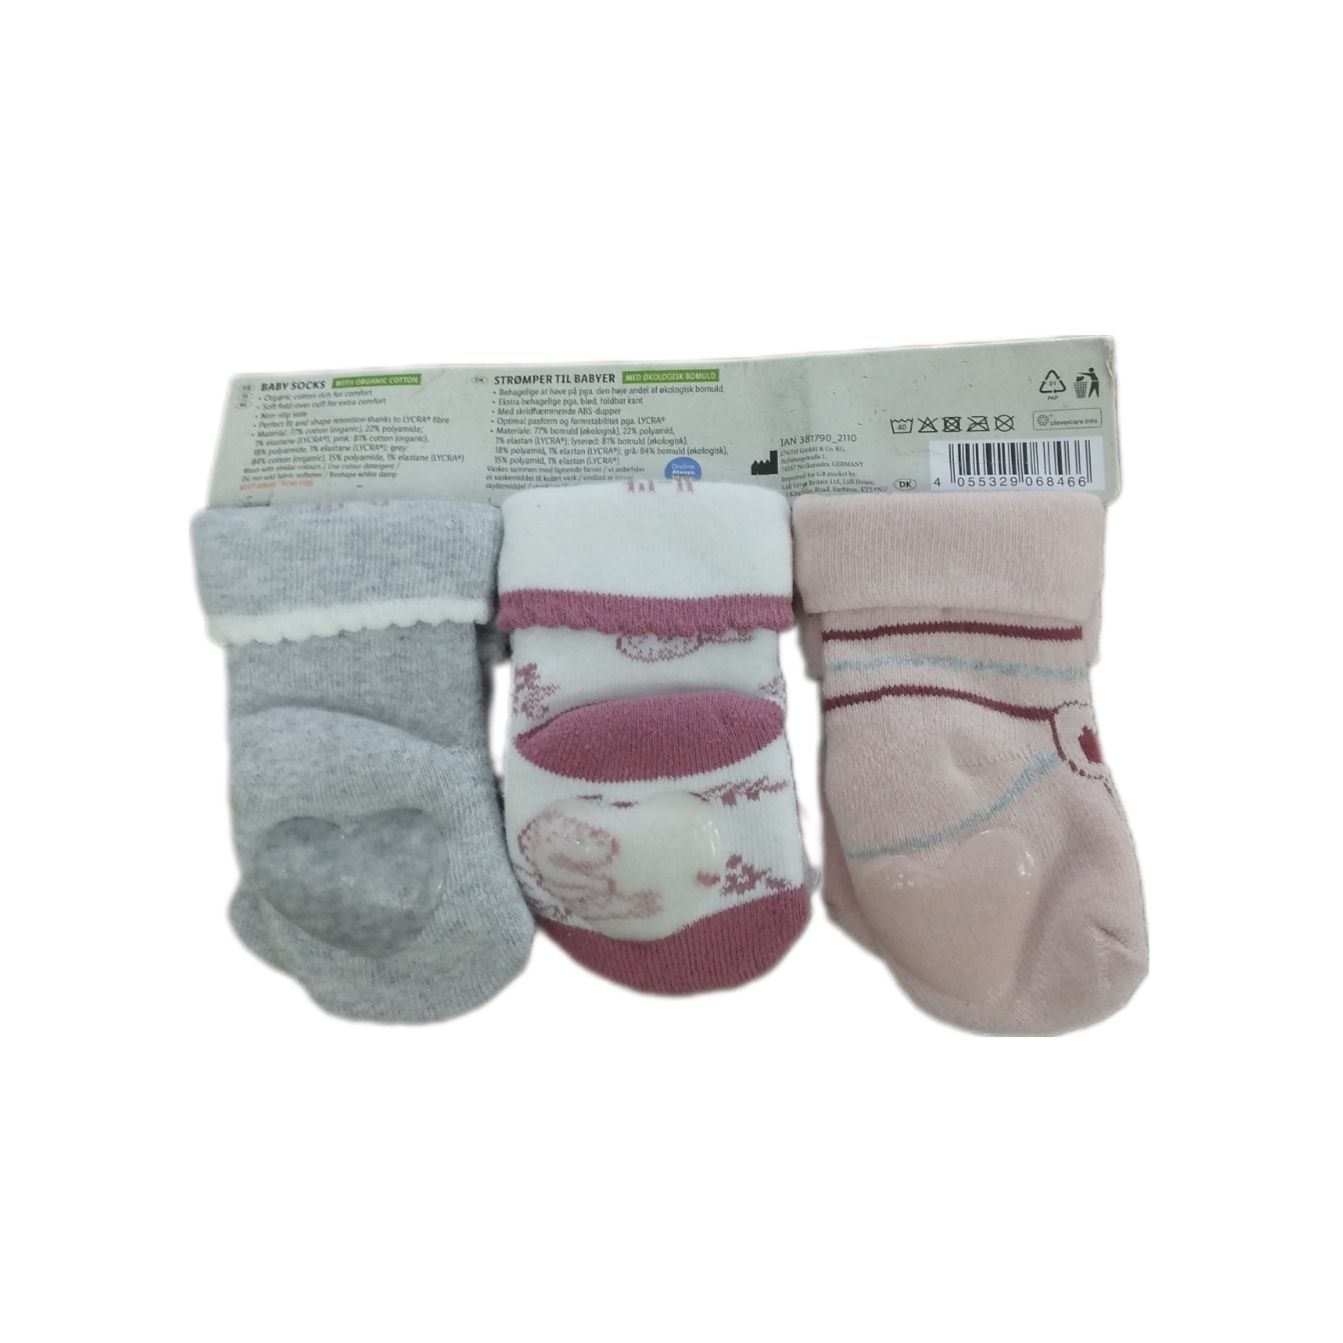 جوراب ساق کوتاه نوزادی لوپیلو مدل Best cotton مجموعه سه عددی  -  - 5